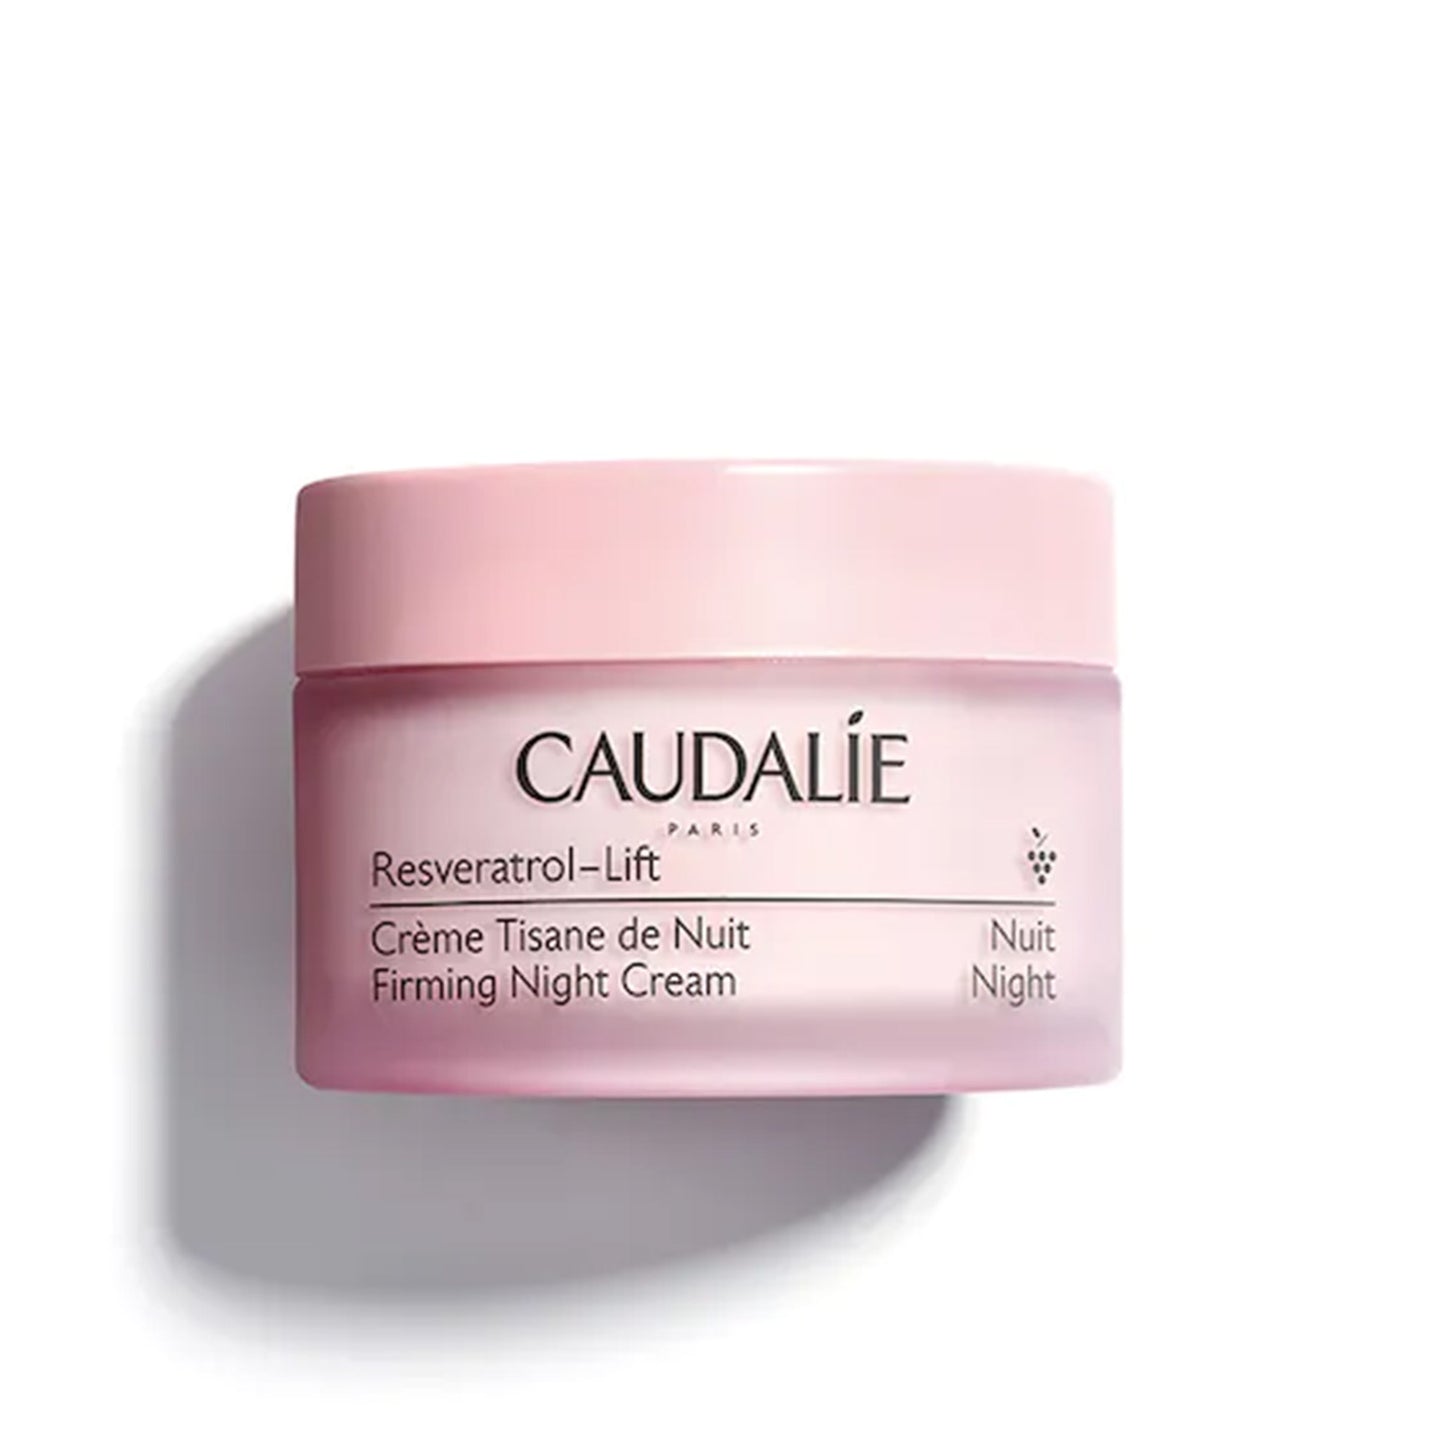 Caudalie's Resveratrol Lift Firming Night Cream works overnight to reduce wrinkles